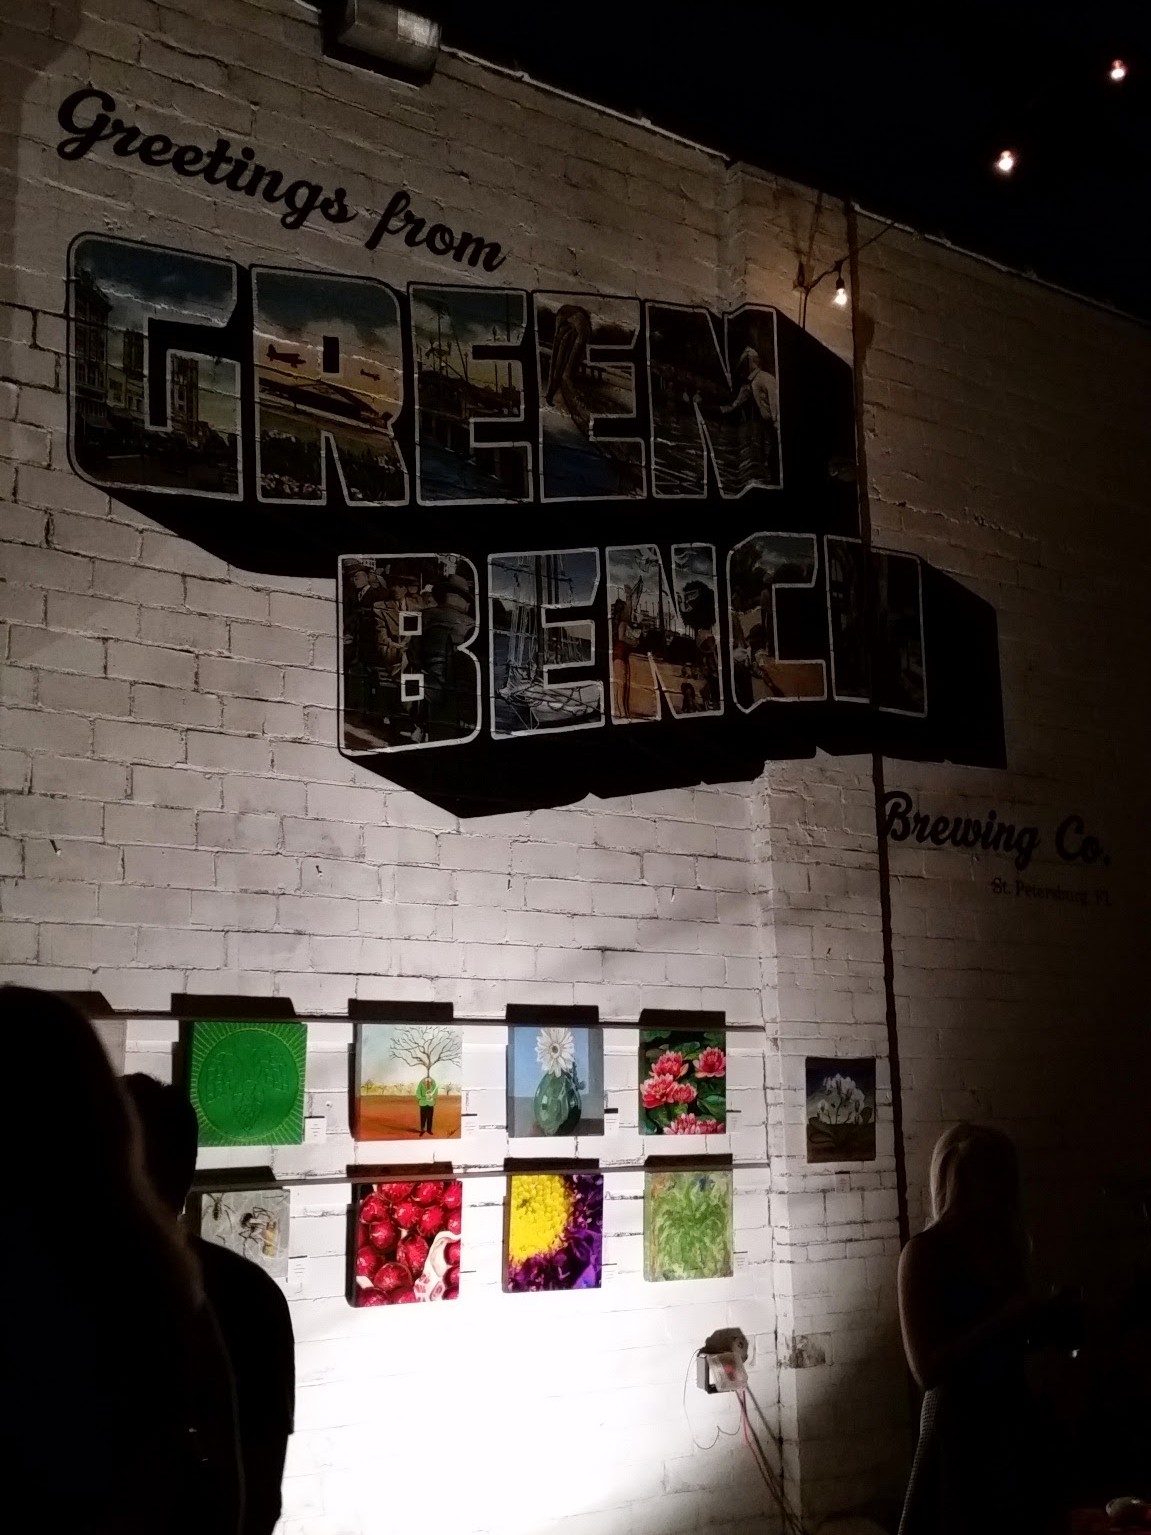 Garden Art Party opening gallery reception, St. Pete, FL, April 2015